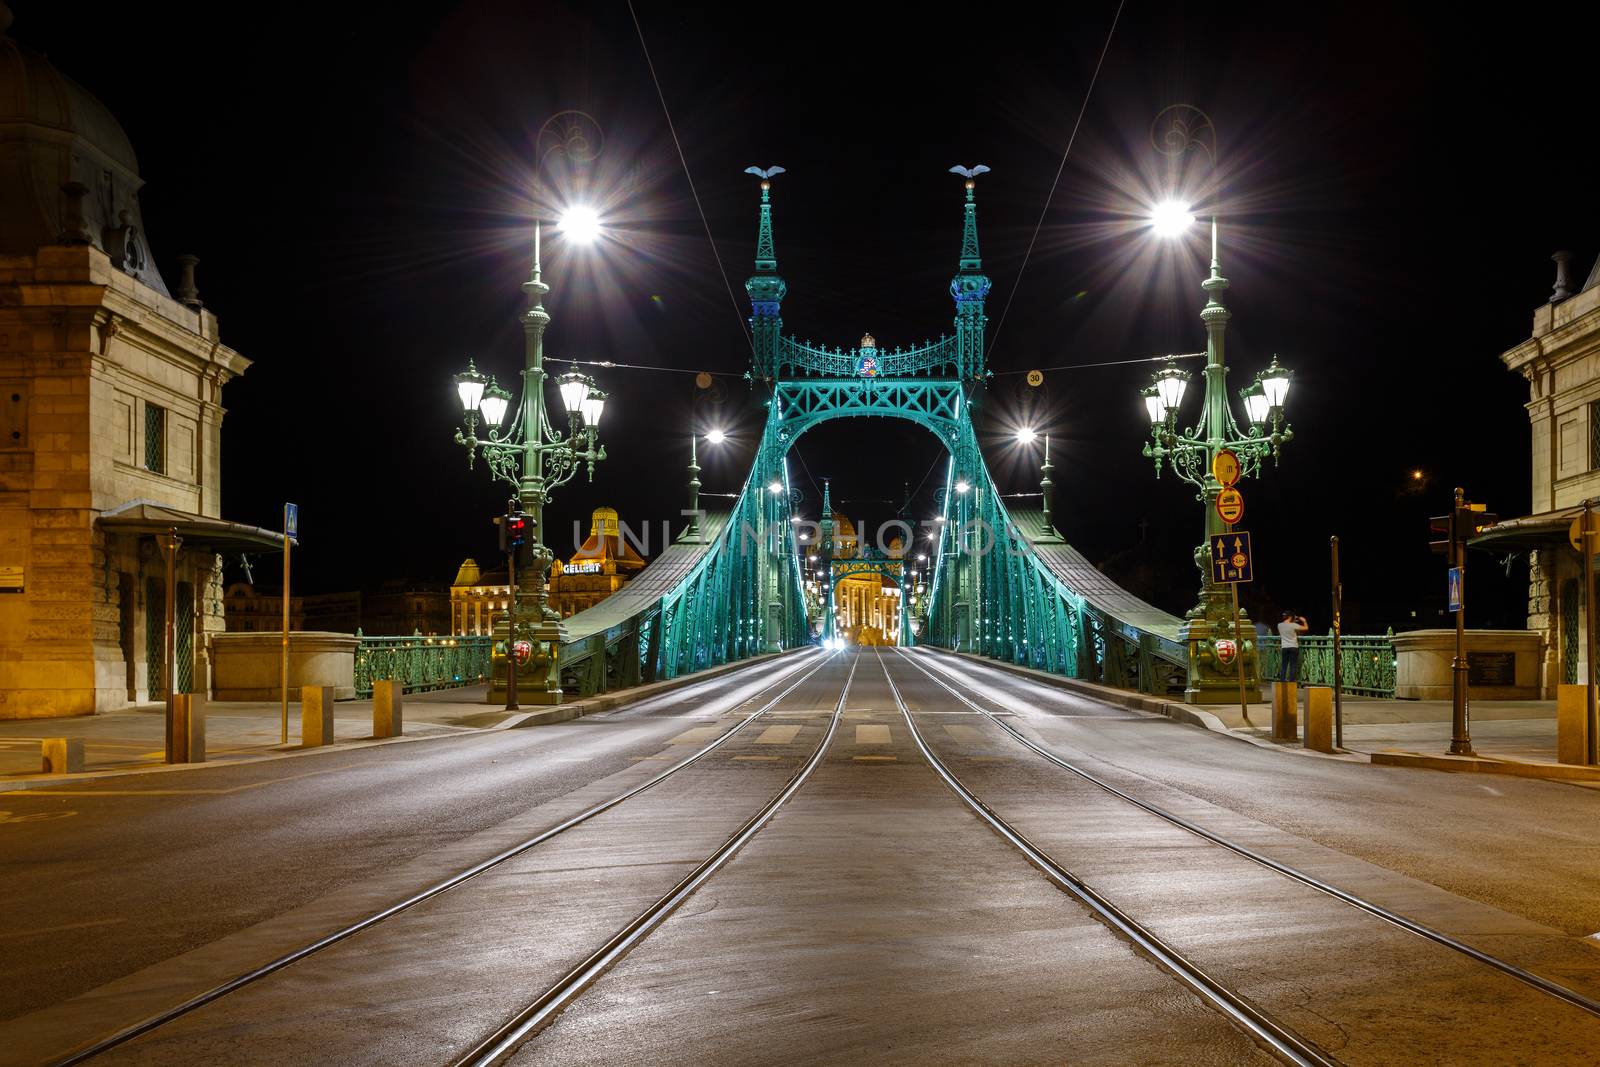 The Freedem bridge in Budapest by Roka